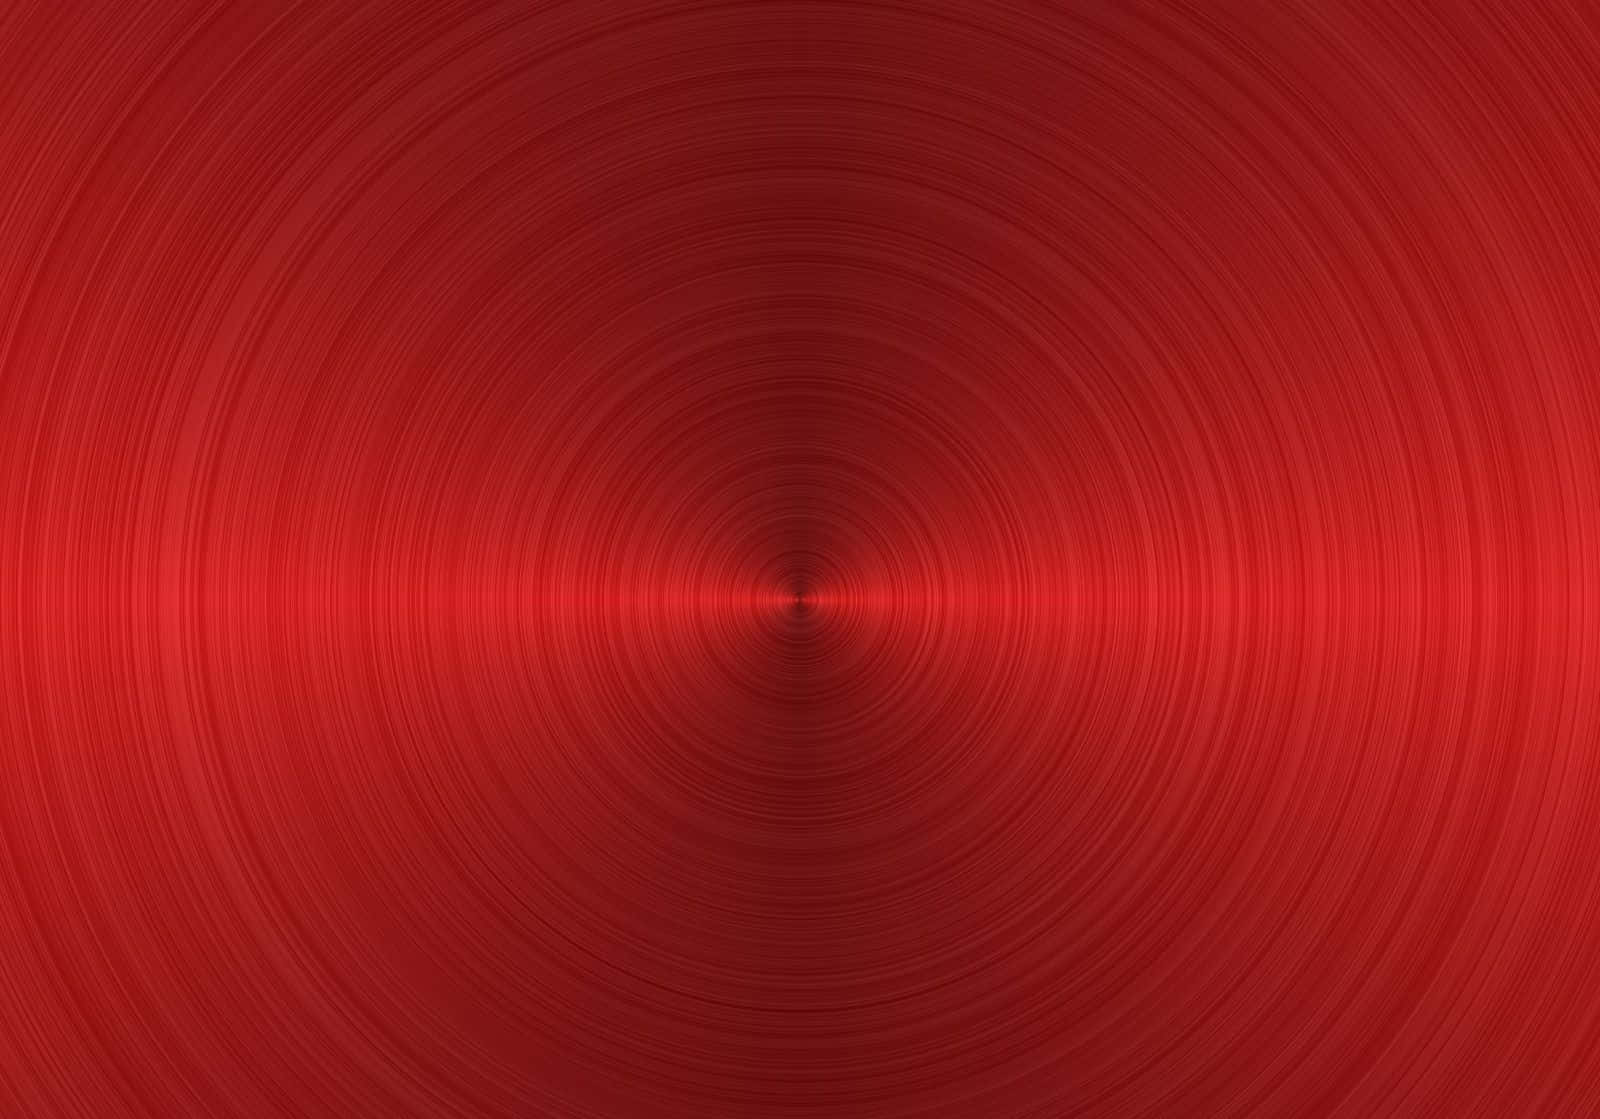 An Eye-catching Red Metallic Background